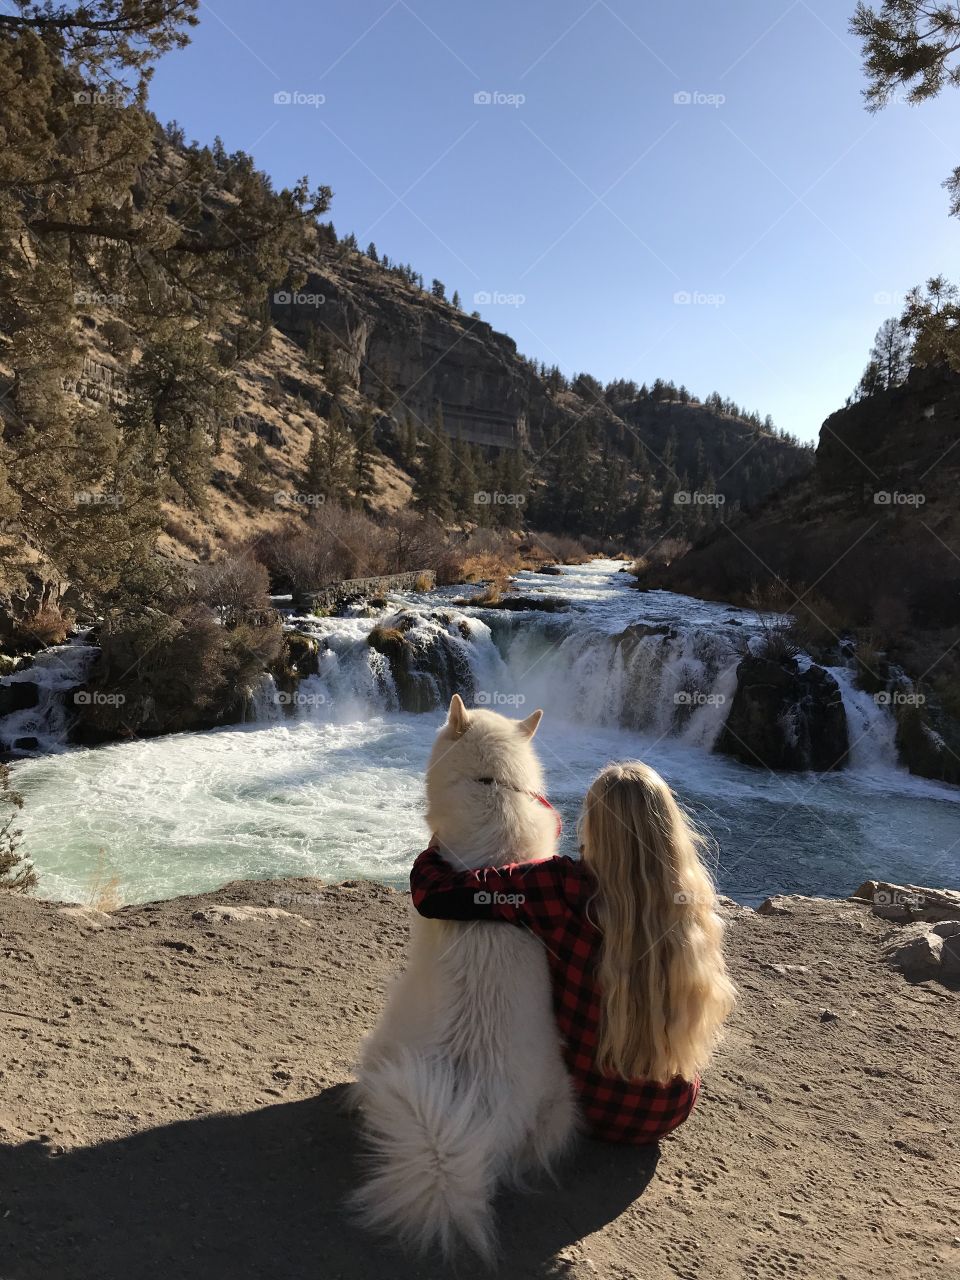 Steelhead falls in Oregon. Girl and her dog enjoying the beauty. 